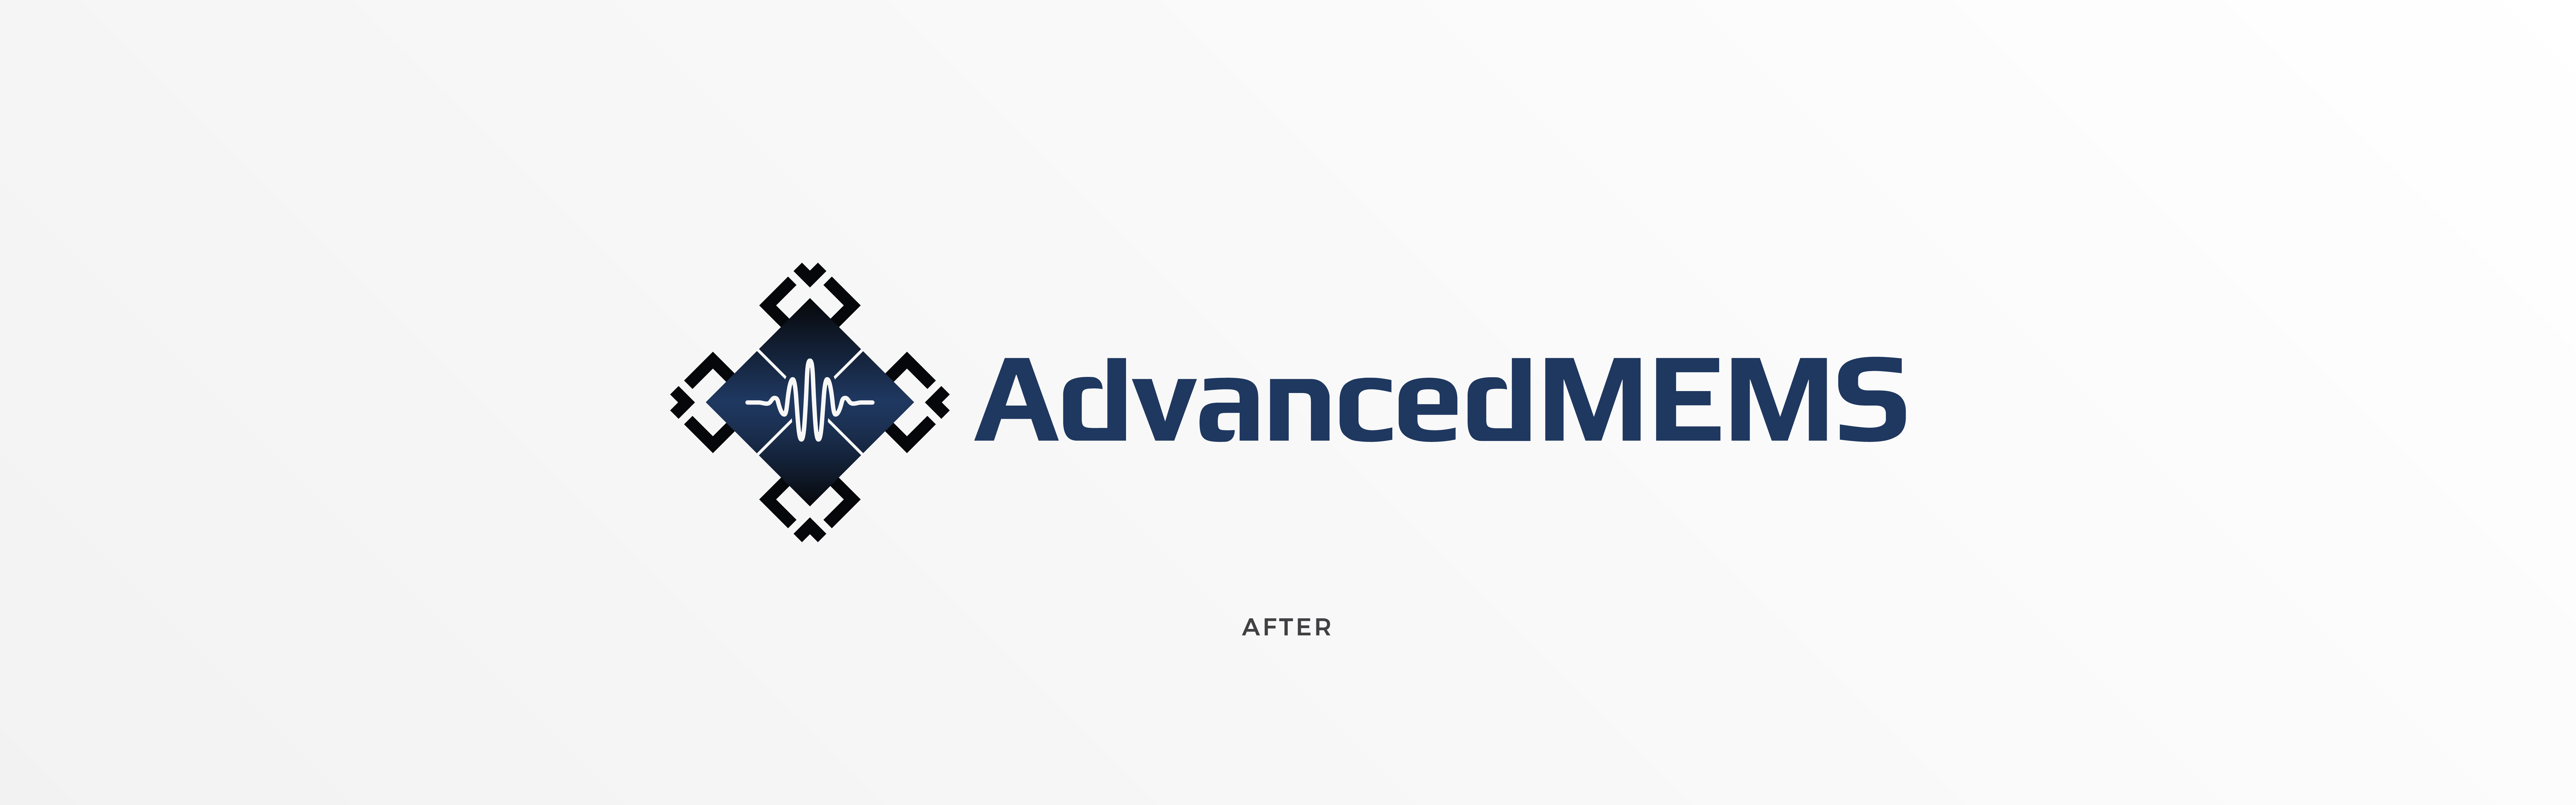 AdvancedMEMS logo after